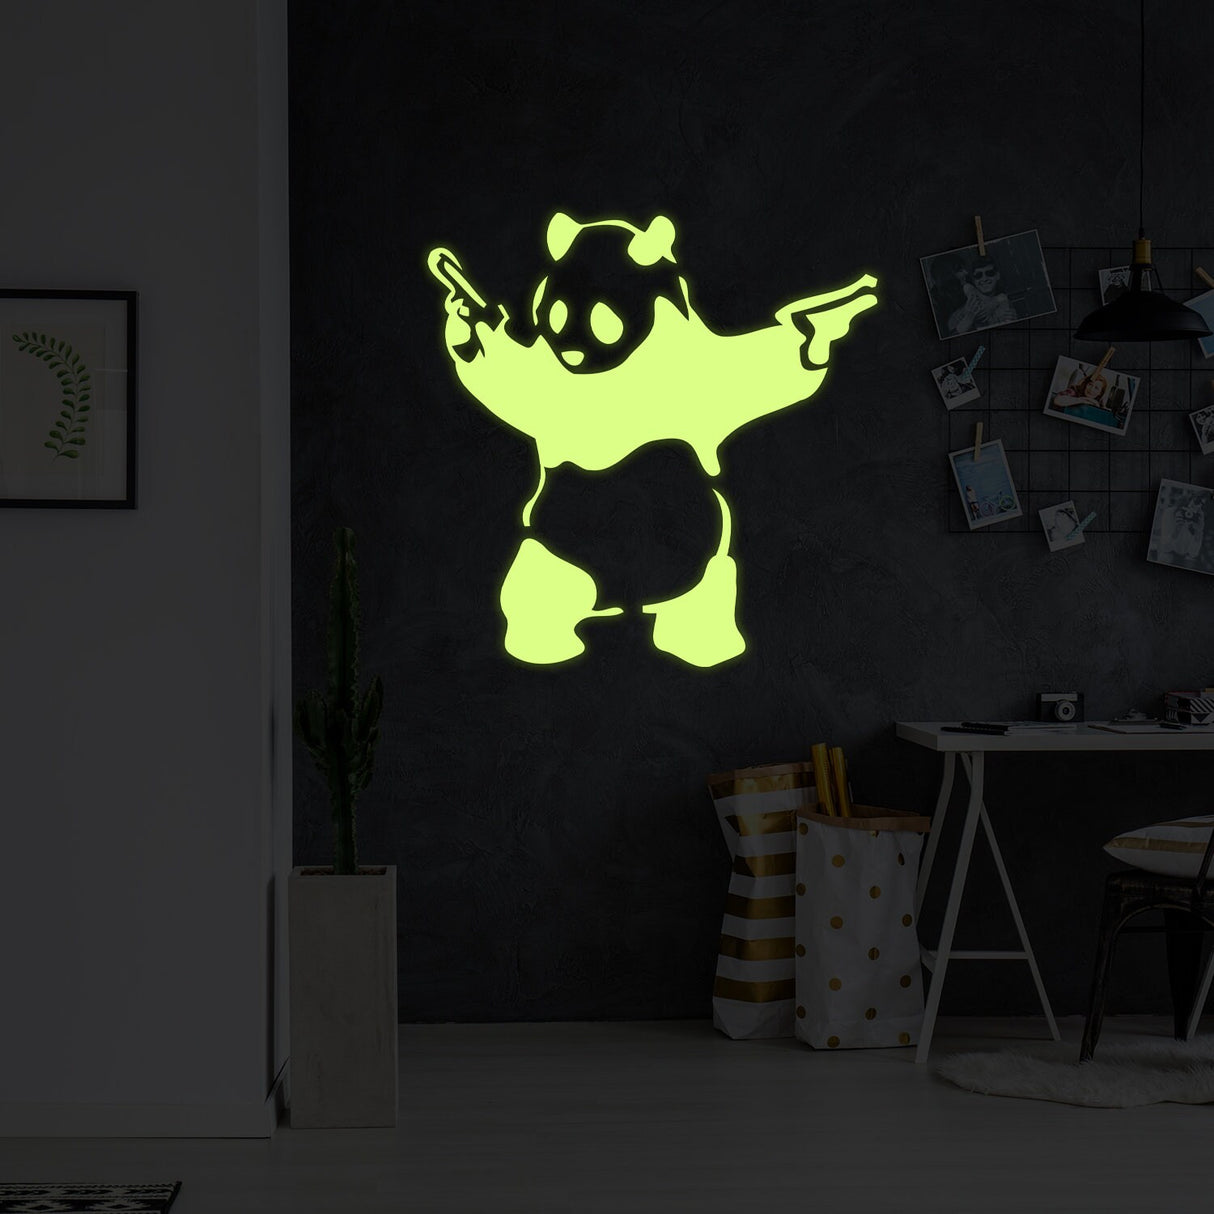 Glow In Dark Banksy Panda With Shooting Guns Wall Sticker - Night Glowing Graffiti Gun Bear Vinyl Decal